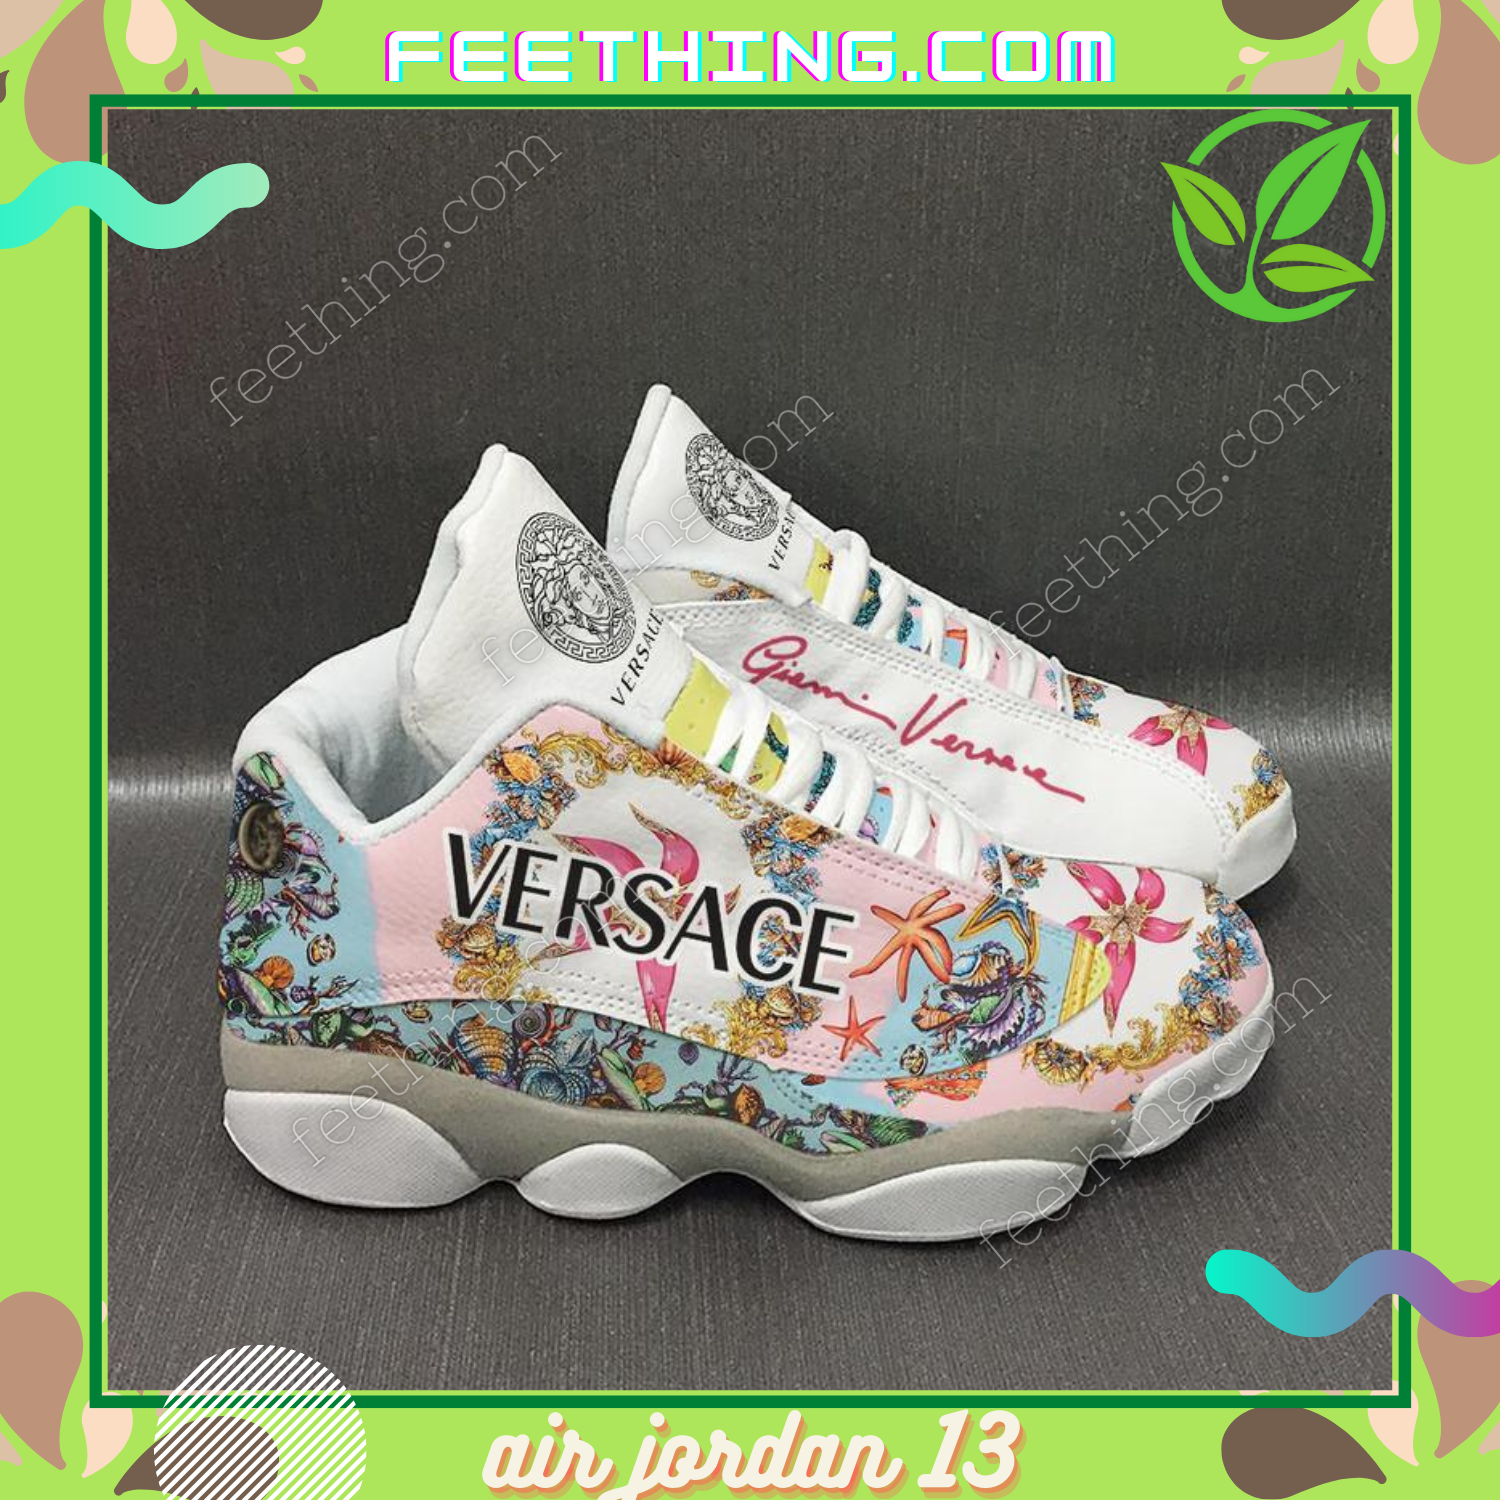 Gianni Versace Flower Air Jordan 13 Luxury Trending Fashion Sneakers Shoes